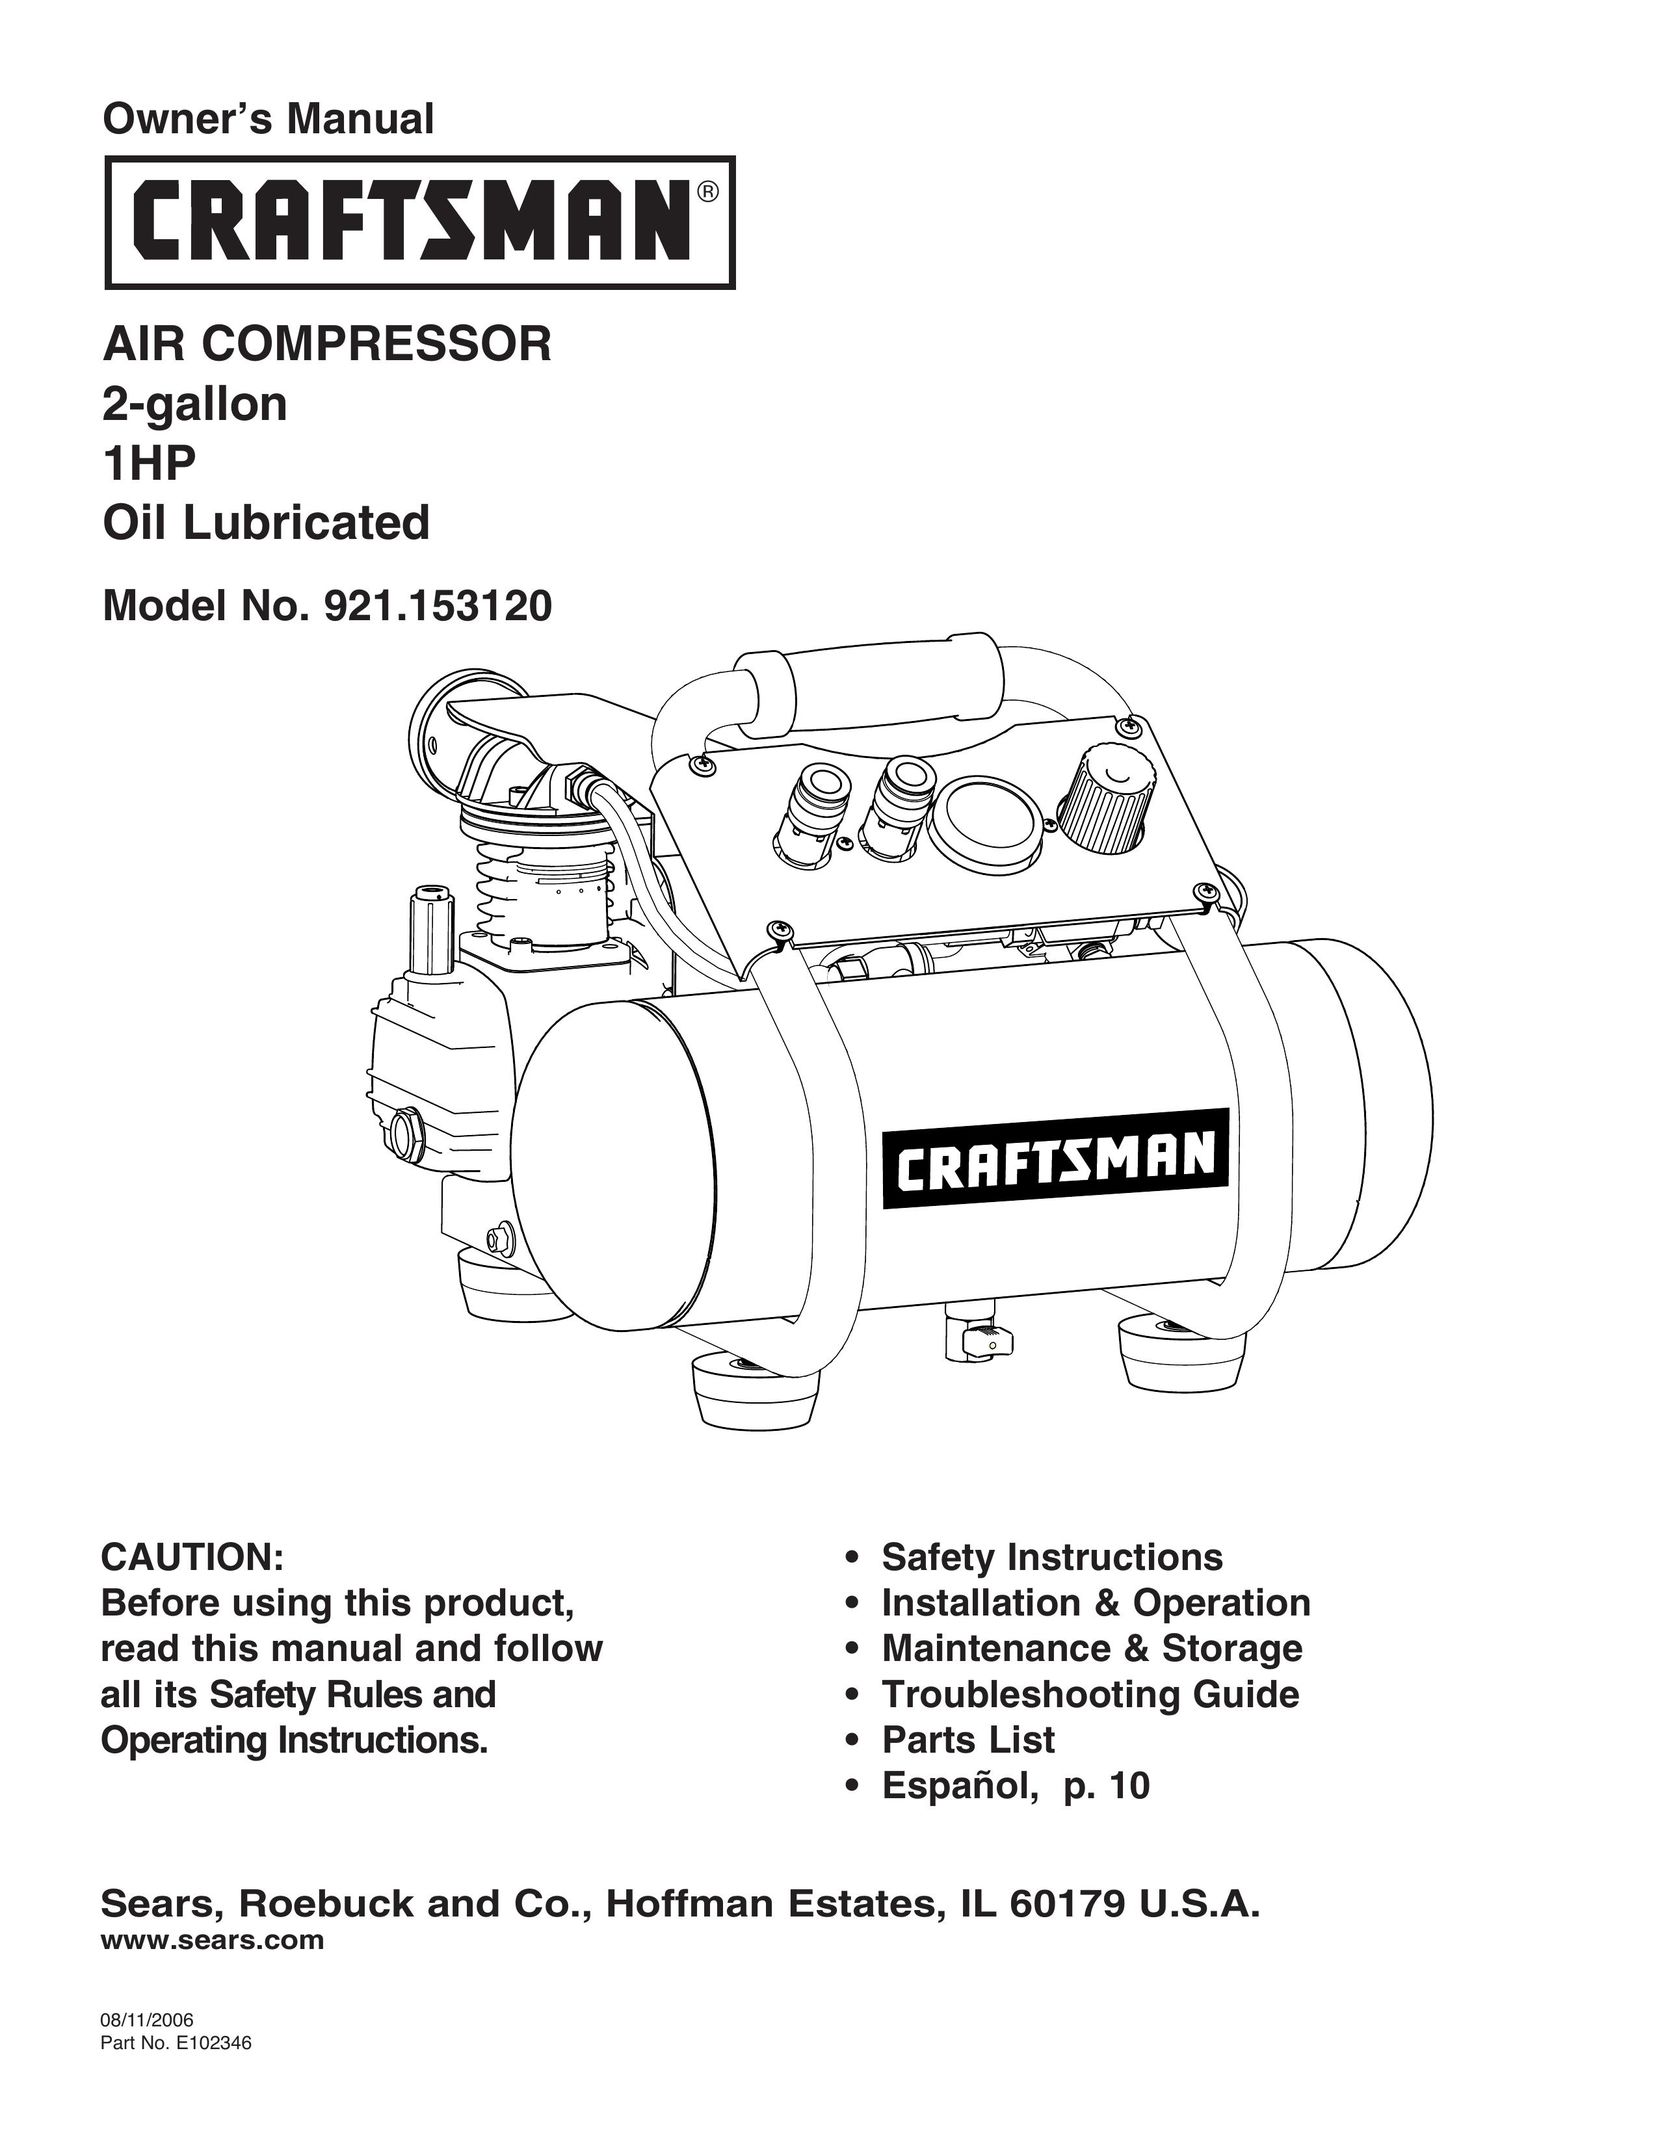 Craftsman 921.153120 Air Compressor User Manual